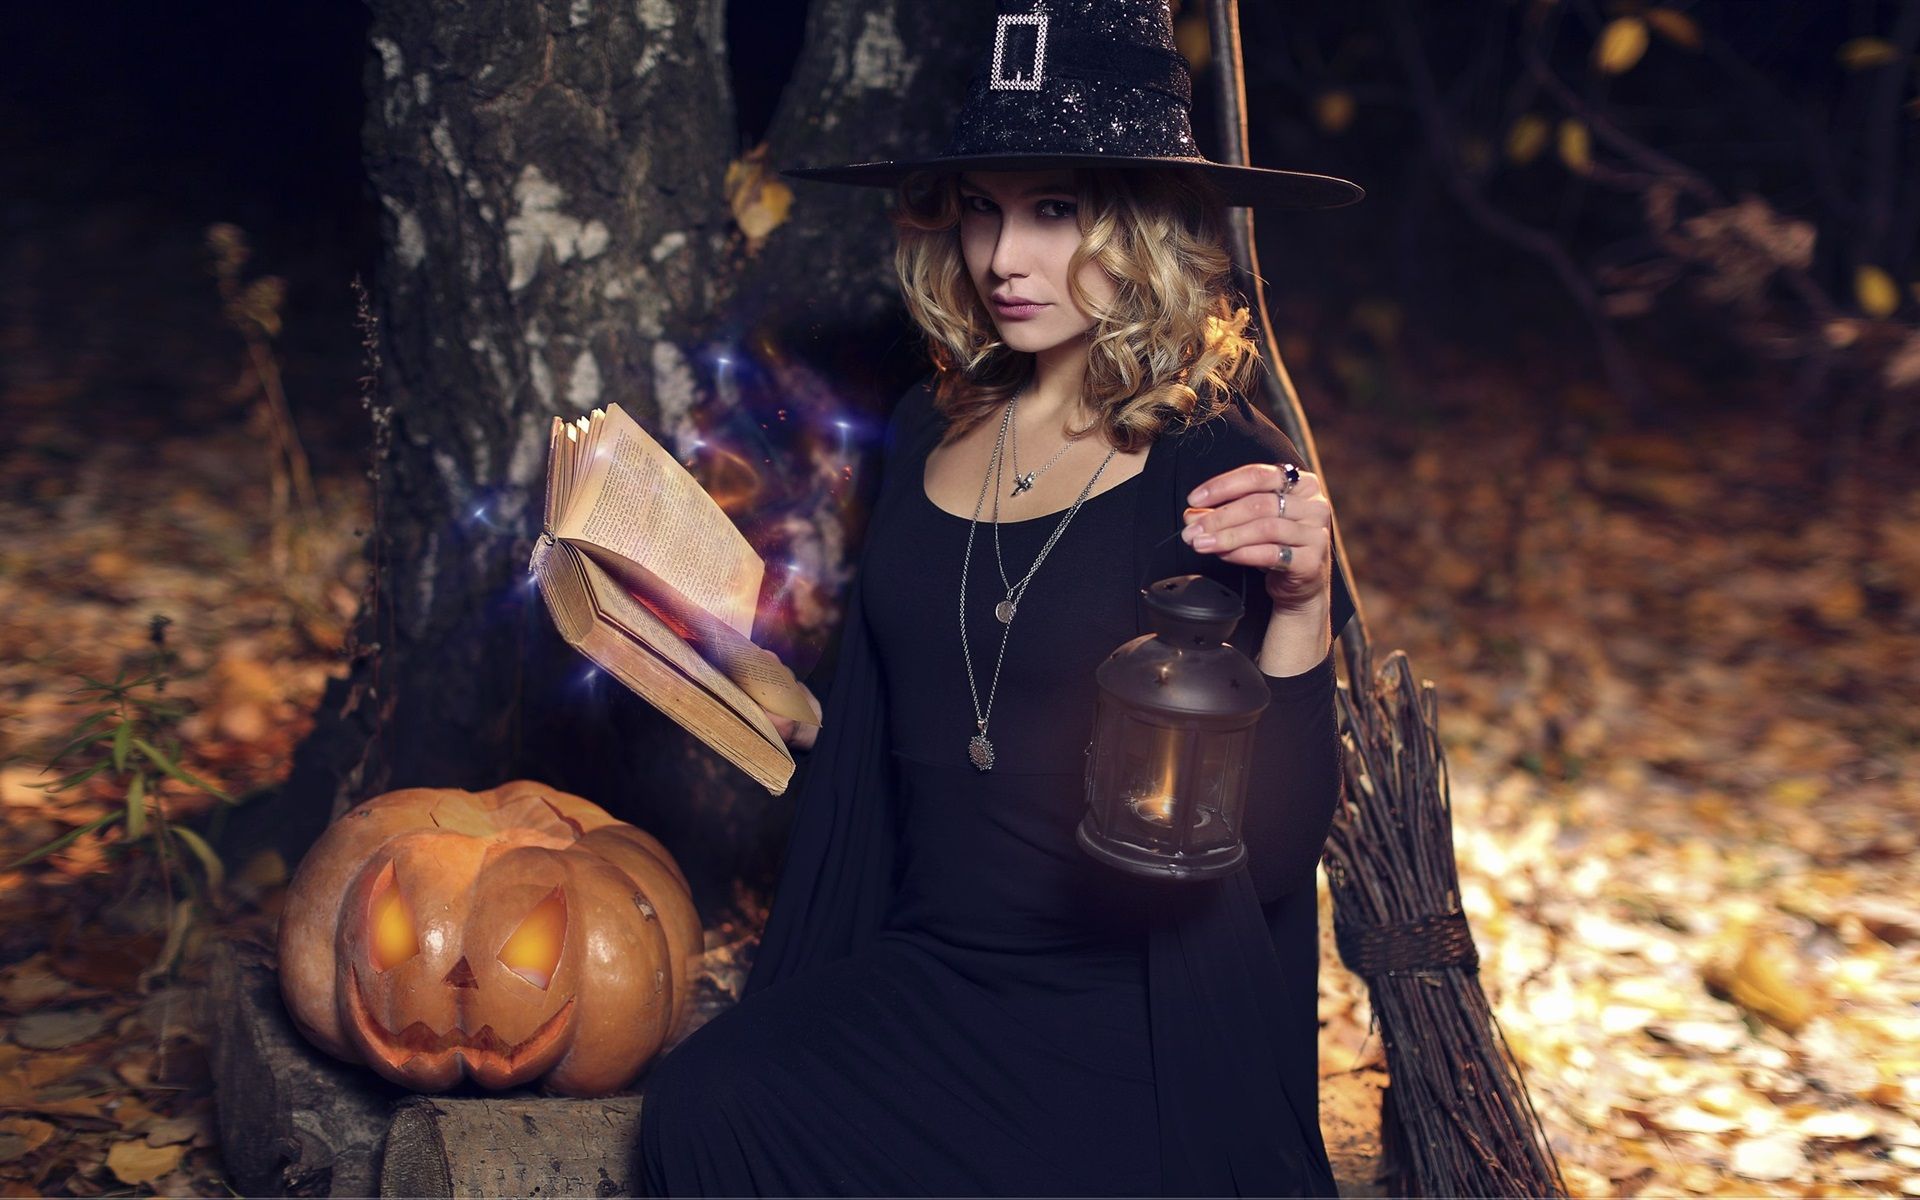 1920x1200 Wallpaper Halloween Witch Girl Broom Pumpkin Lantern 2560x1440 Qhd Picture Image